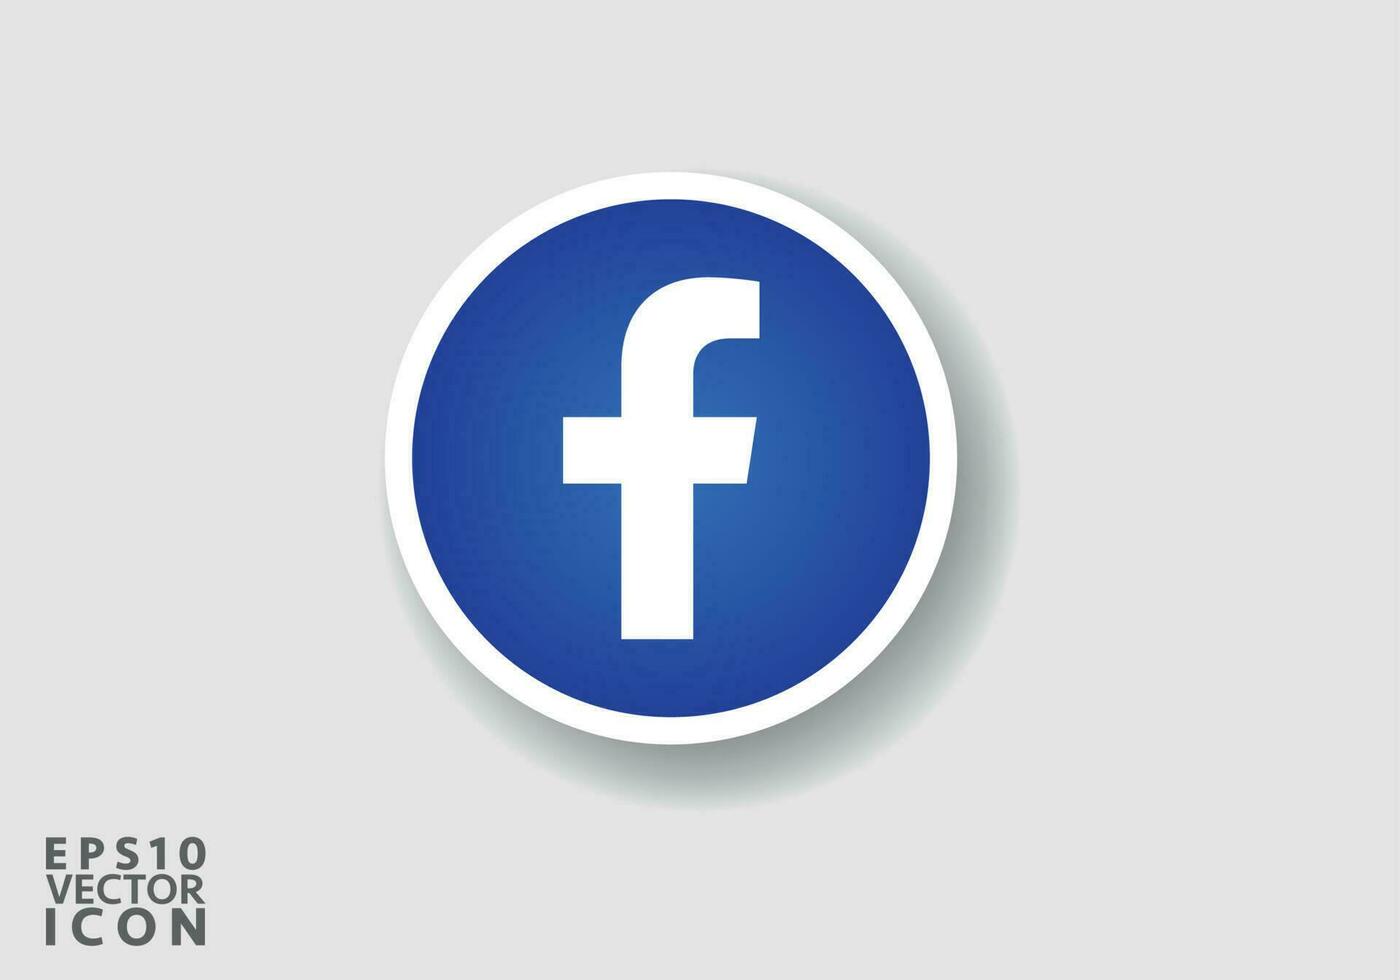 rond Facebook logo social médias logo. Facebook icône. Facebook est populaire social médias. vecteur illustration